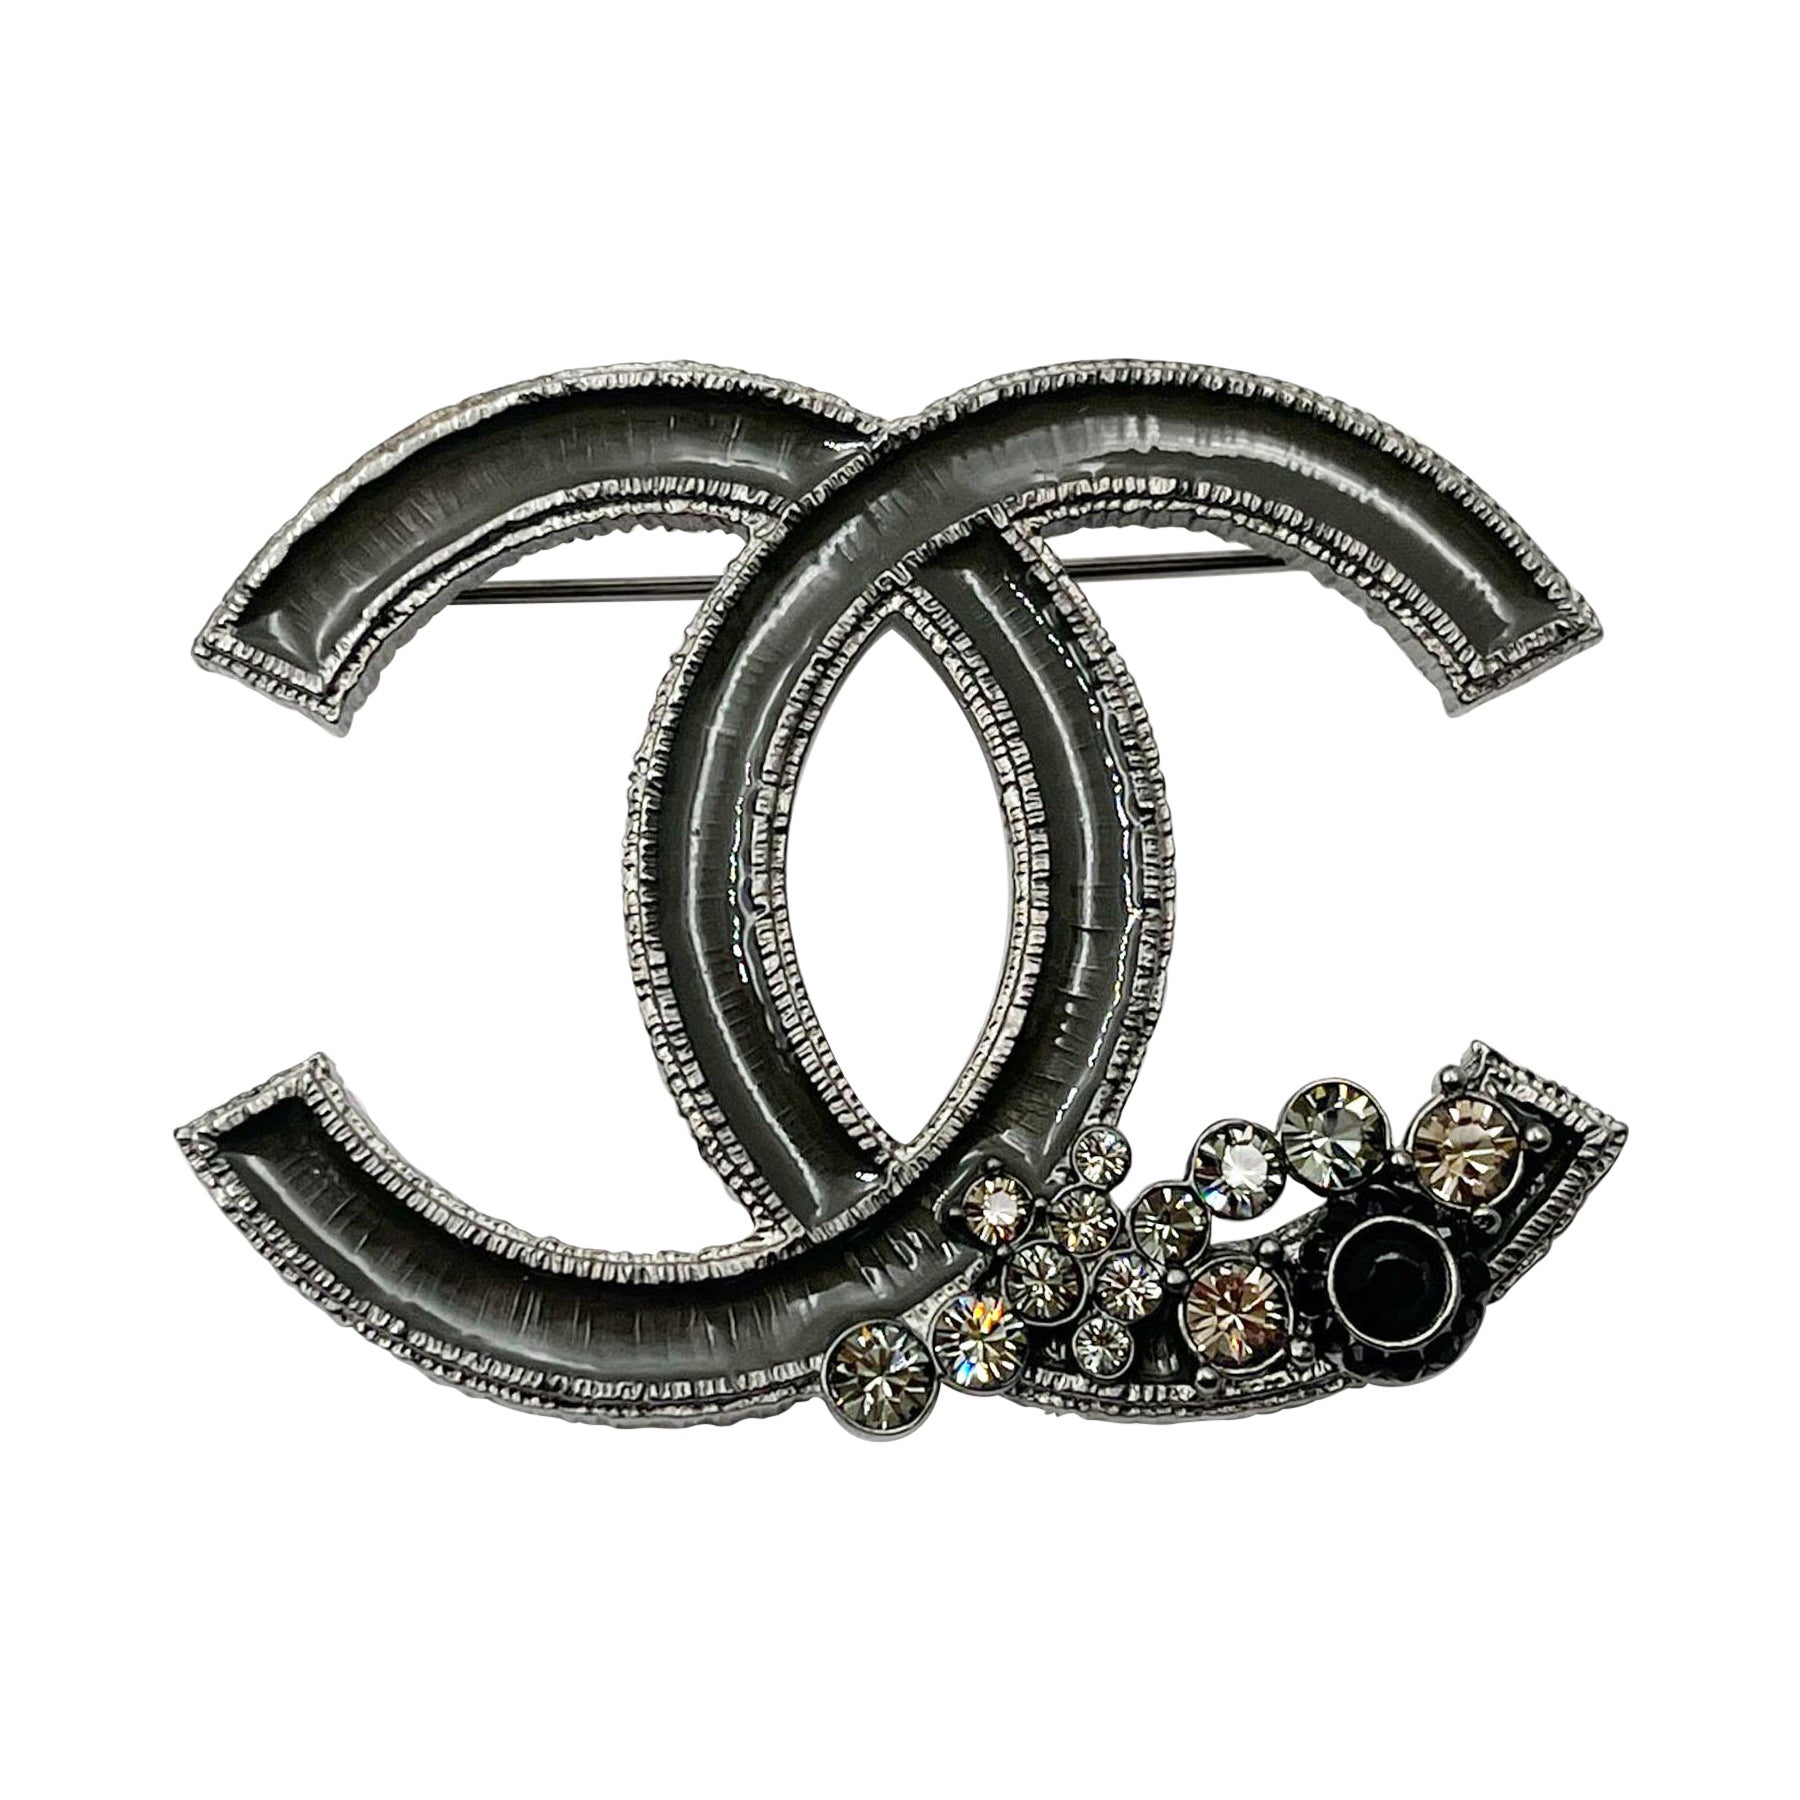 Chanel No 5 Original - 43 For Sale on 1stDibs